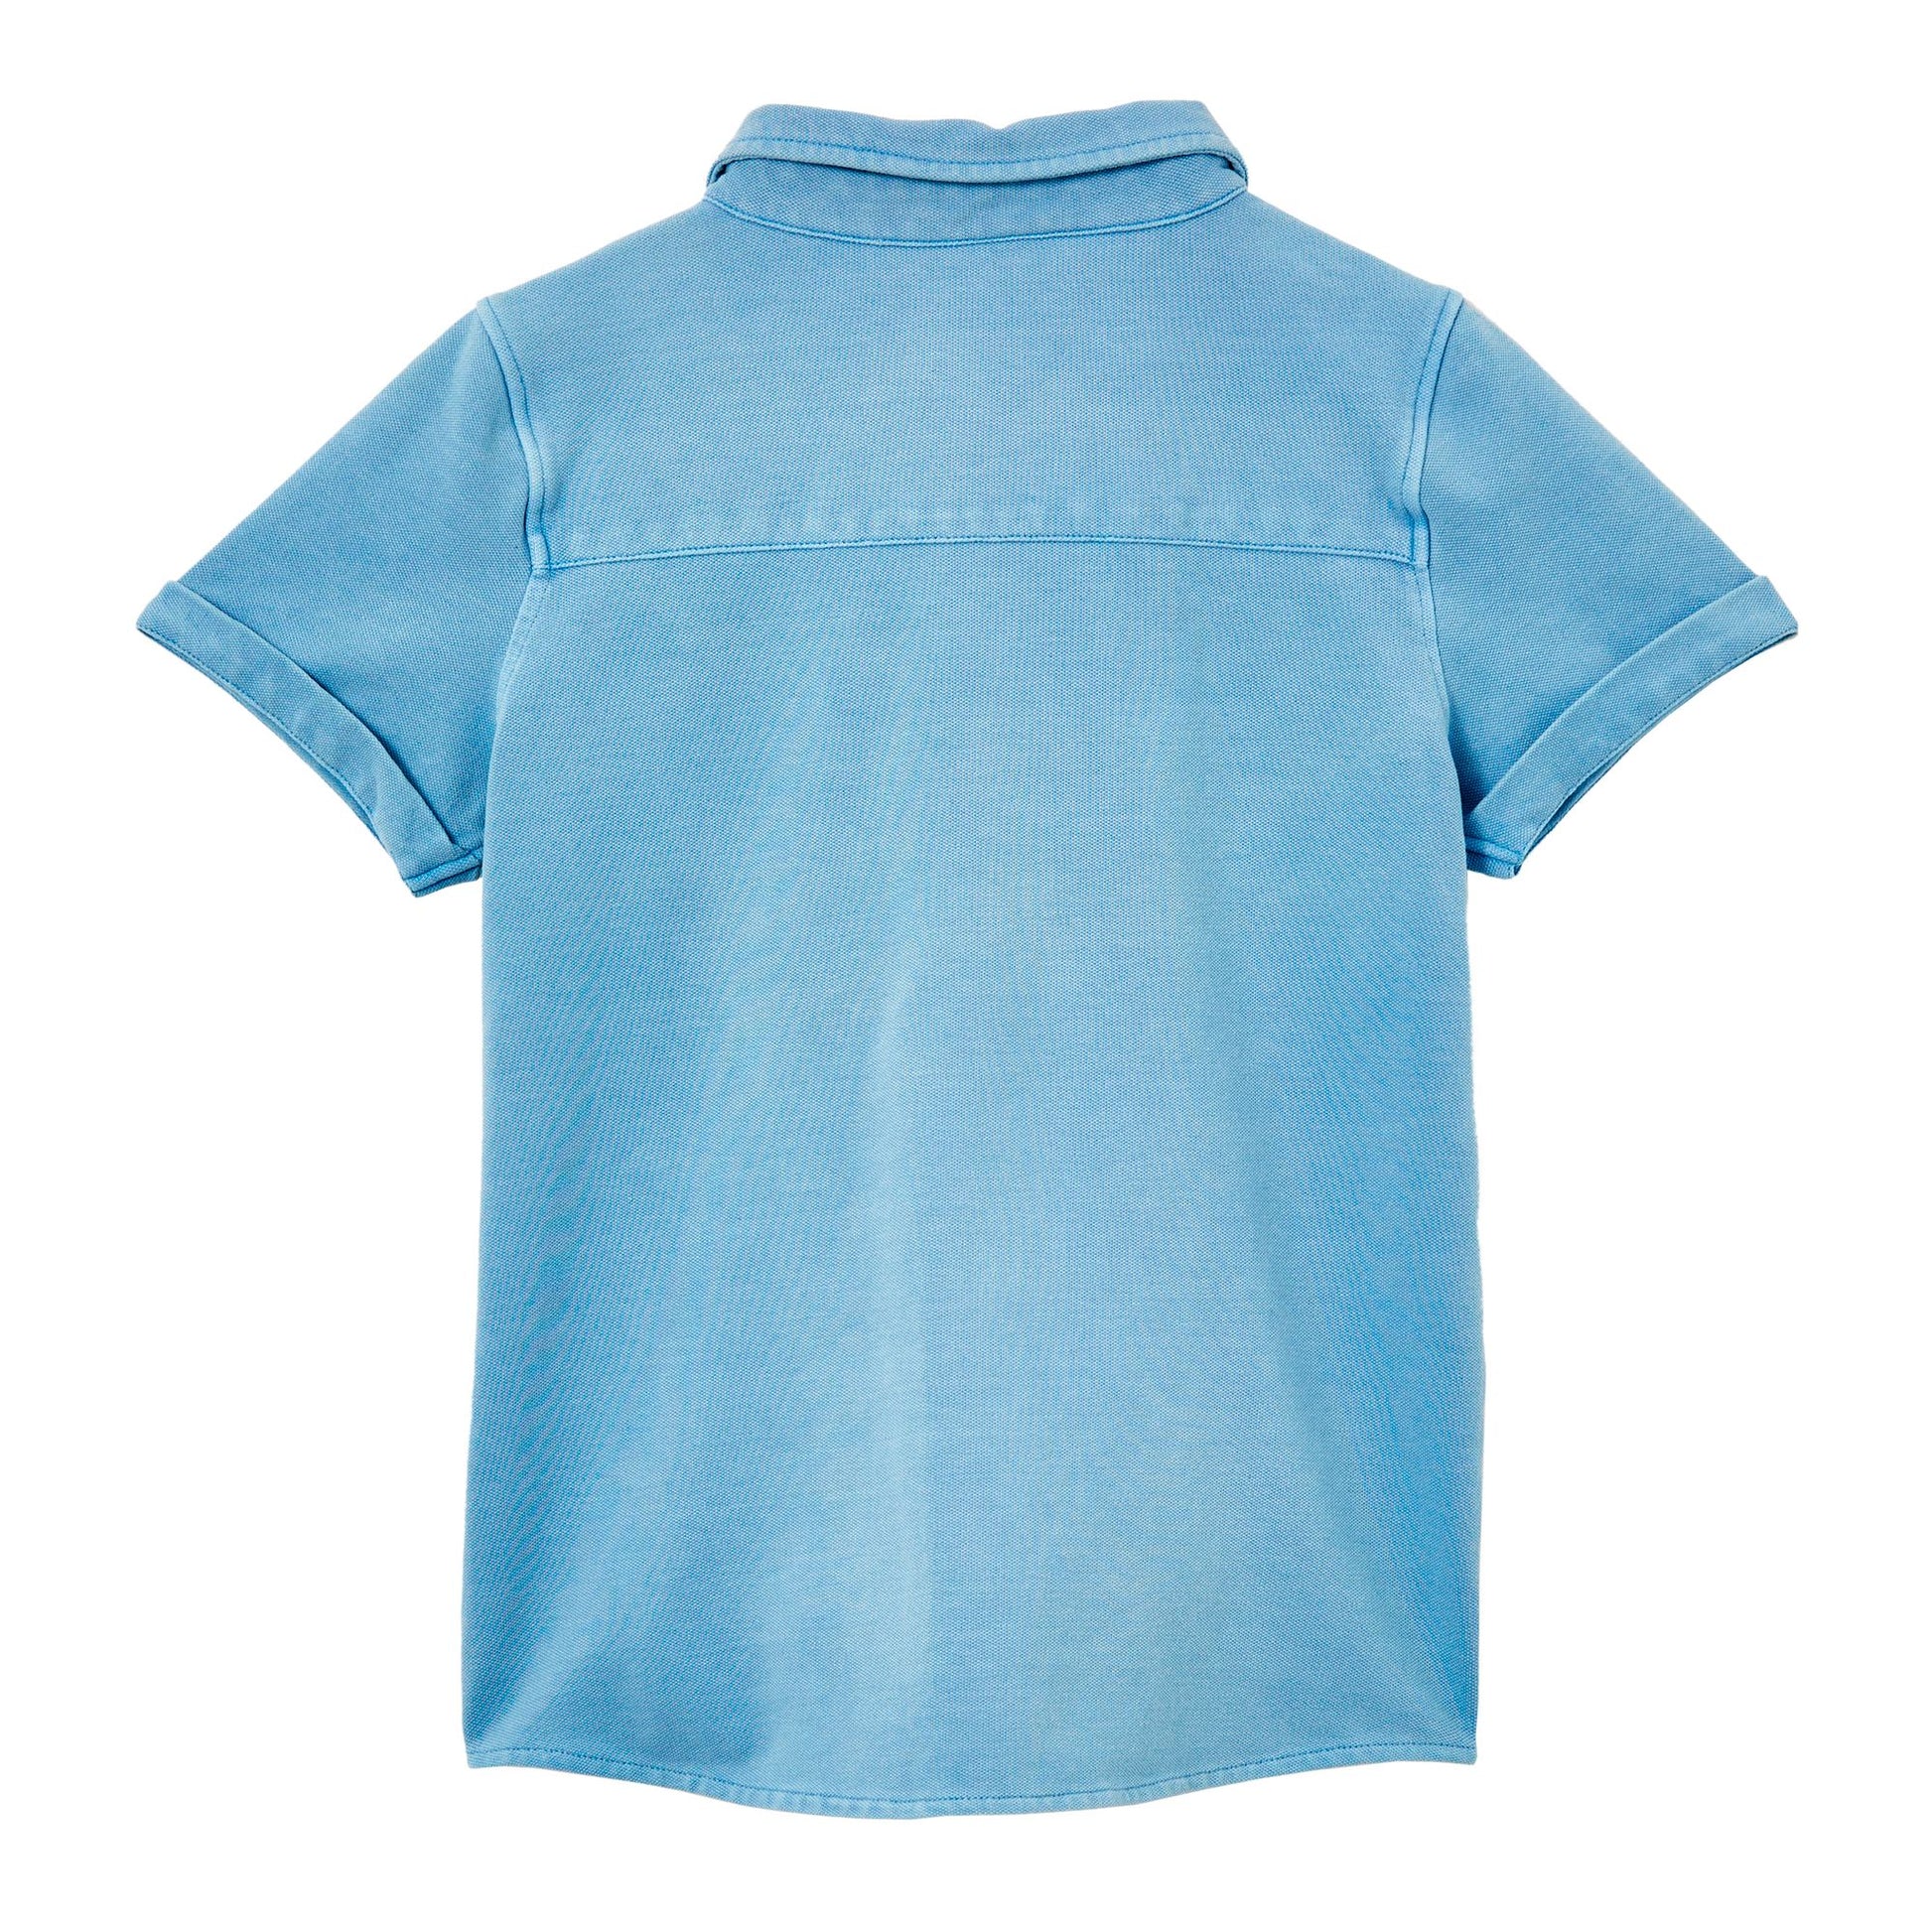 Blue Pique Shirt, Milky, Rudi Patootie, Merimbula